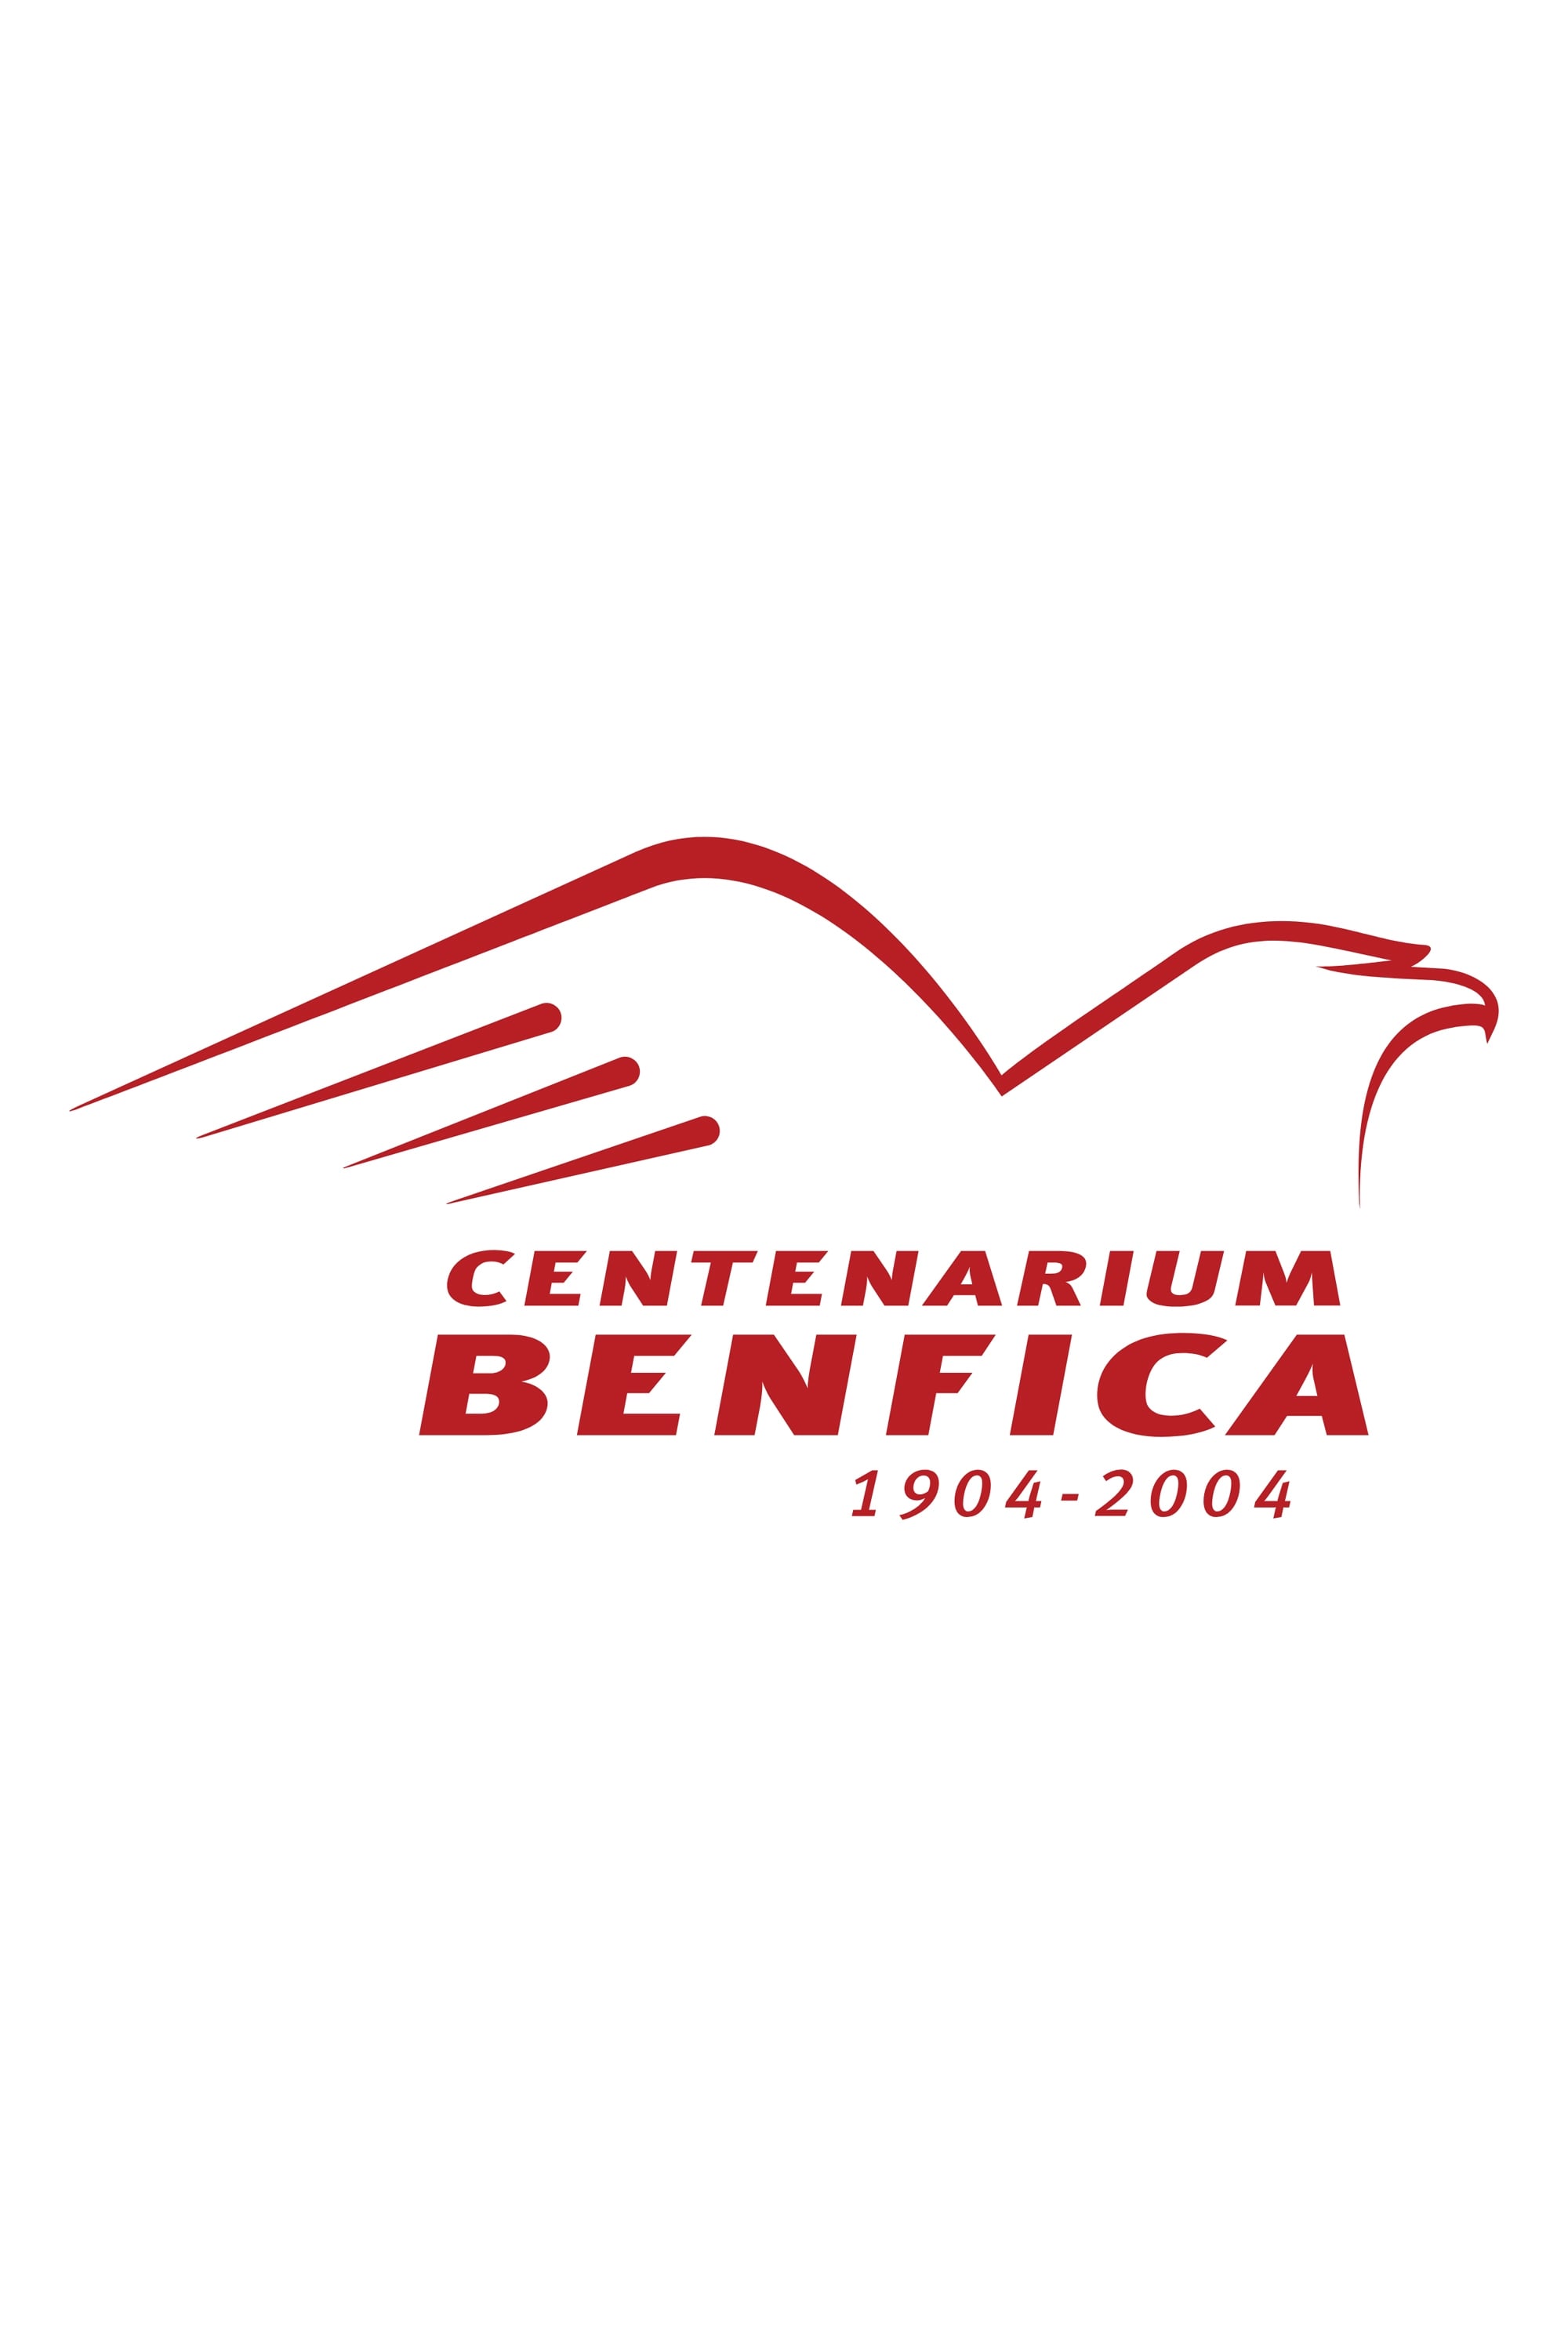 Ano Centenarium - Benfica 1904-2004